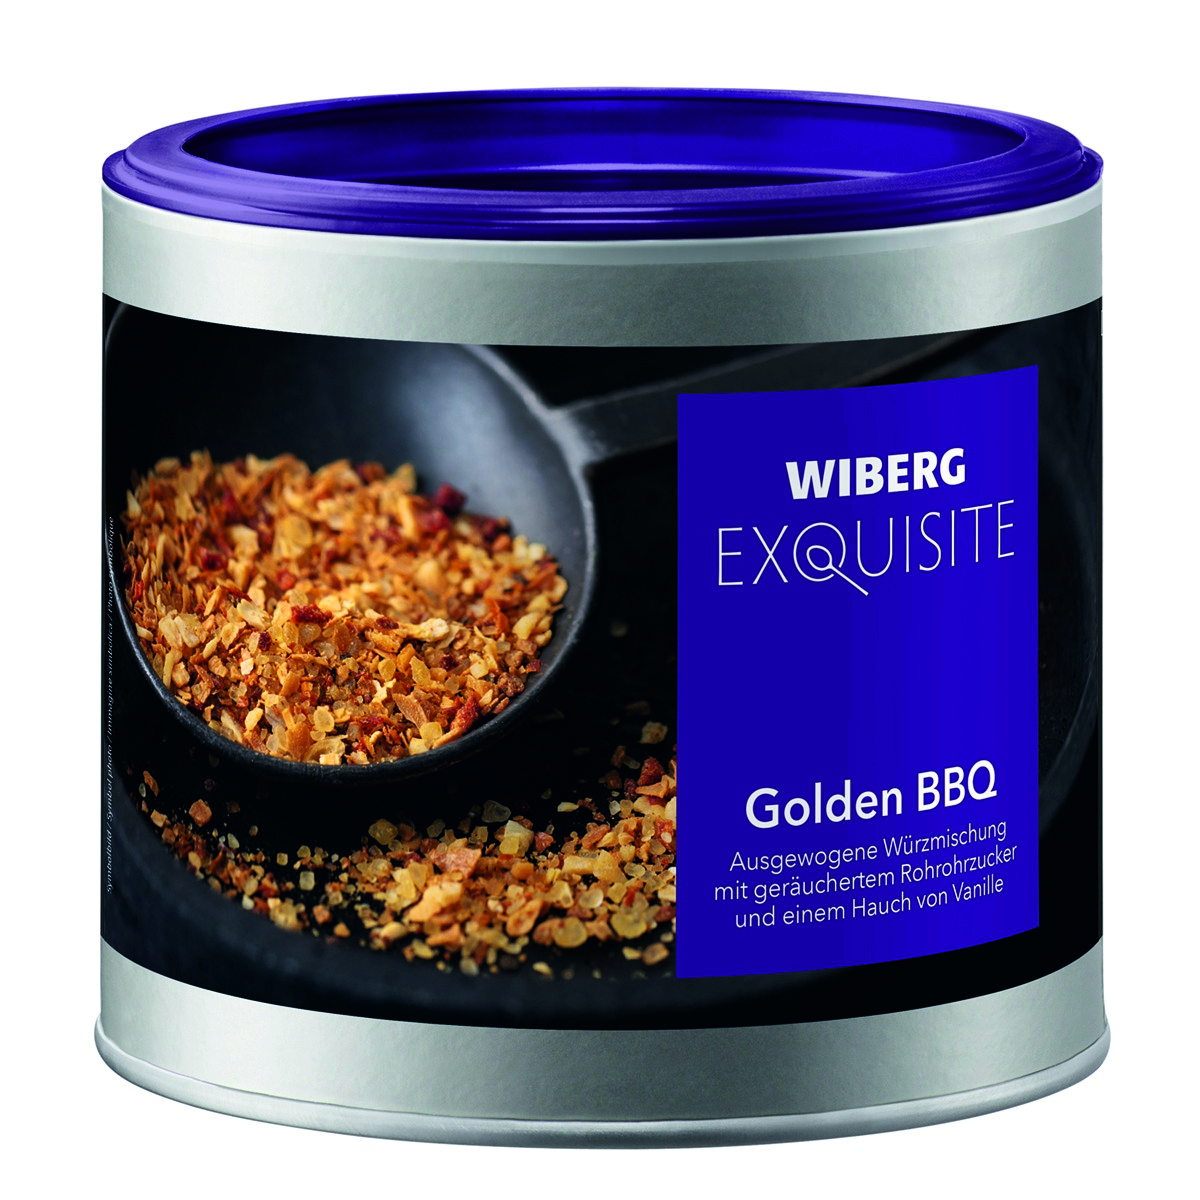 WIBERG Exquisite Golden BBQ